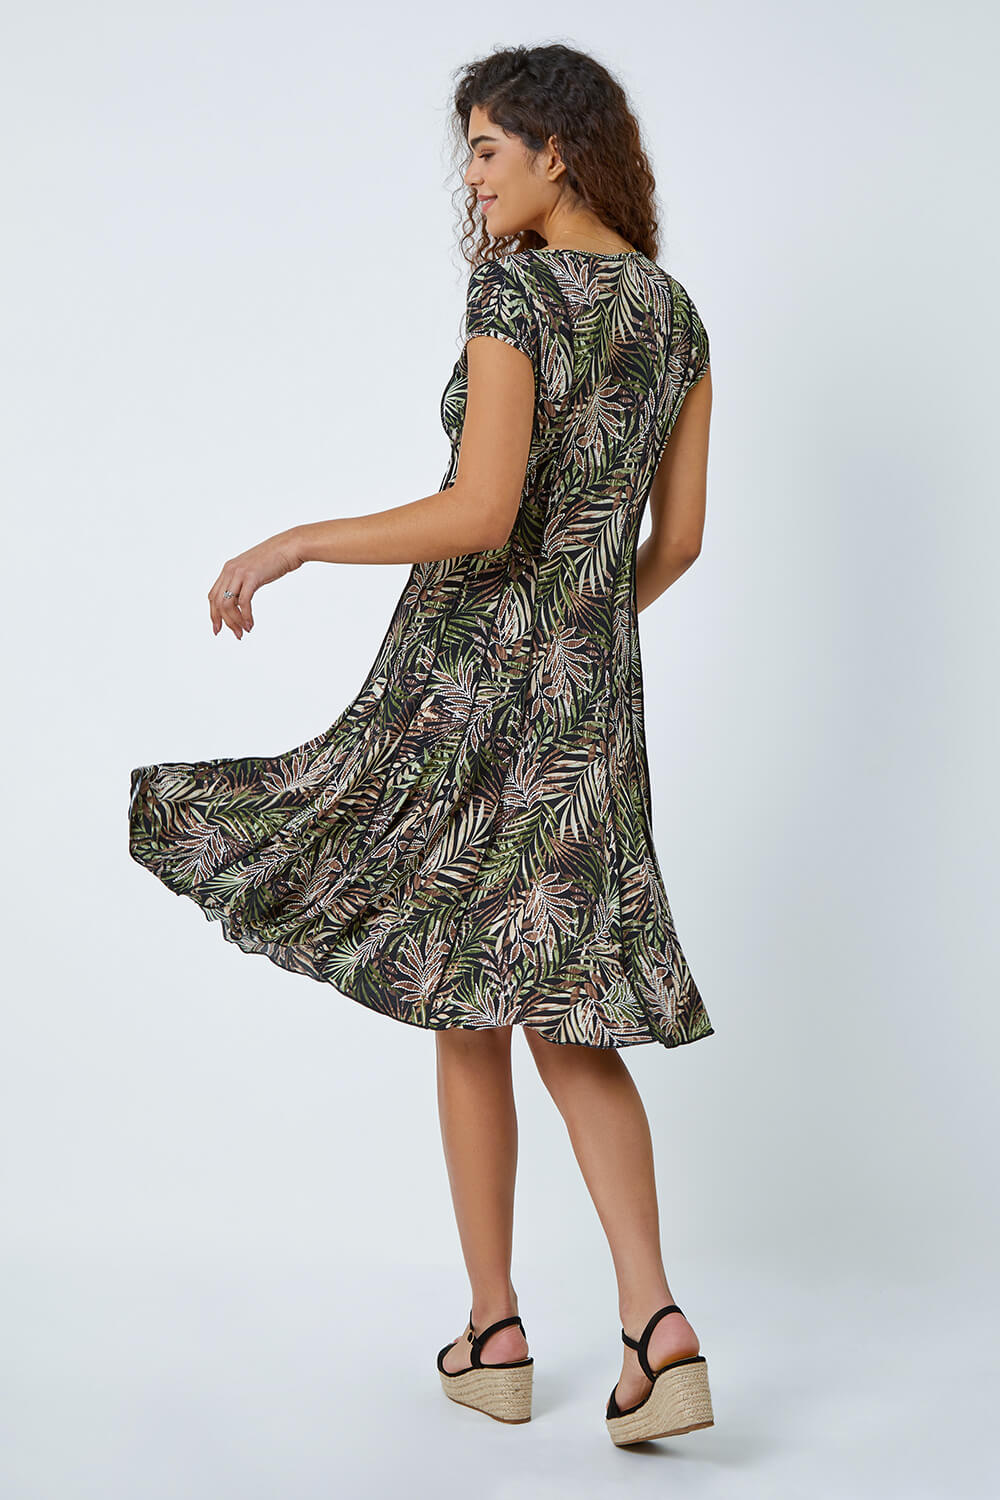 KHAKI Leaf Print Panel Stretch Dress, Image 3 of 5